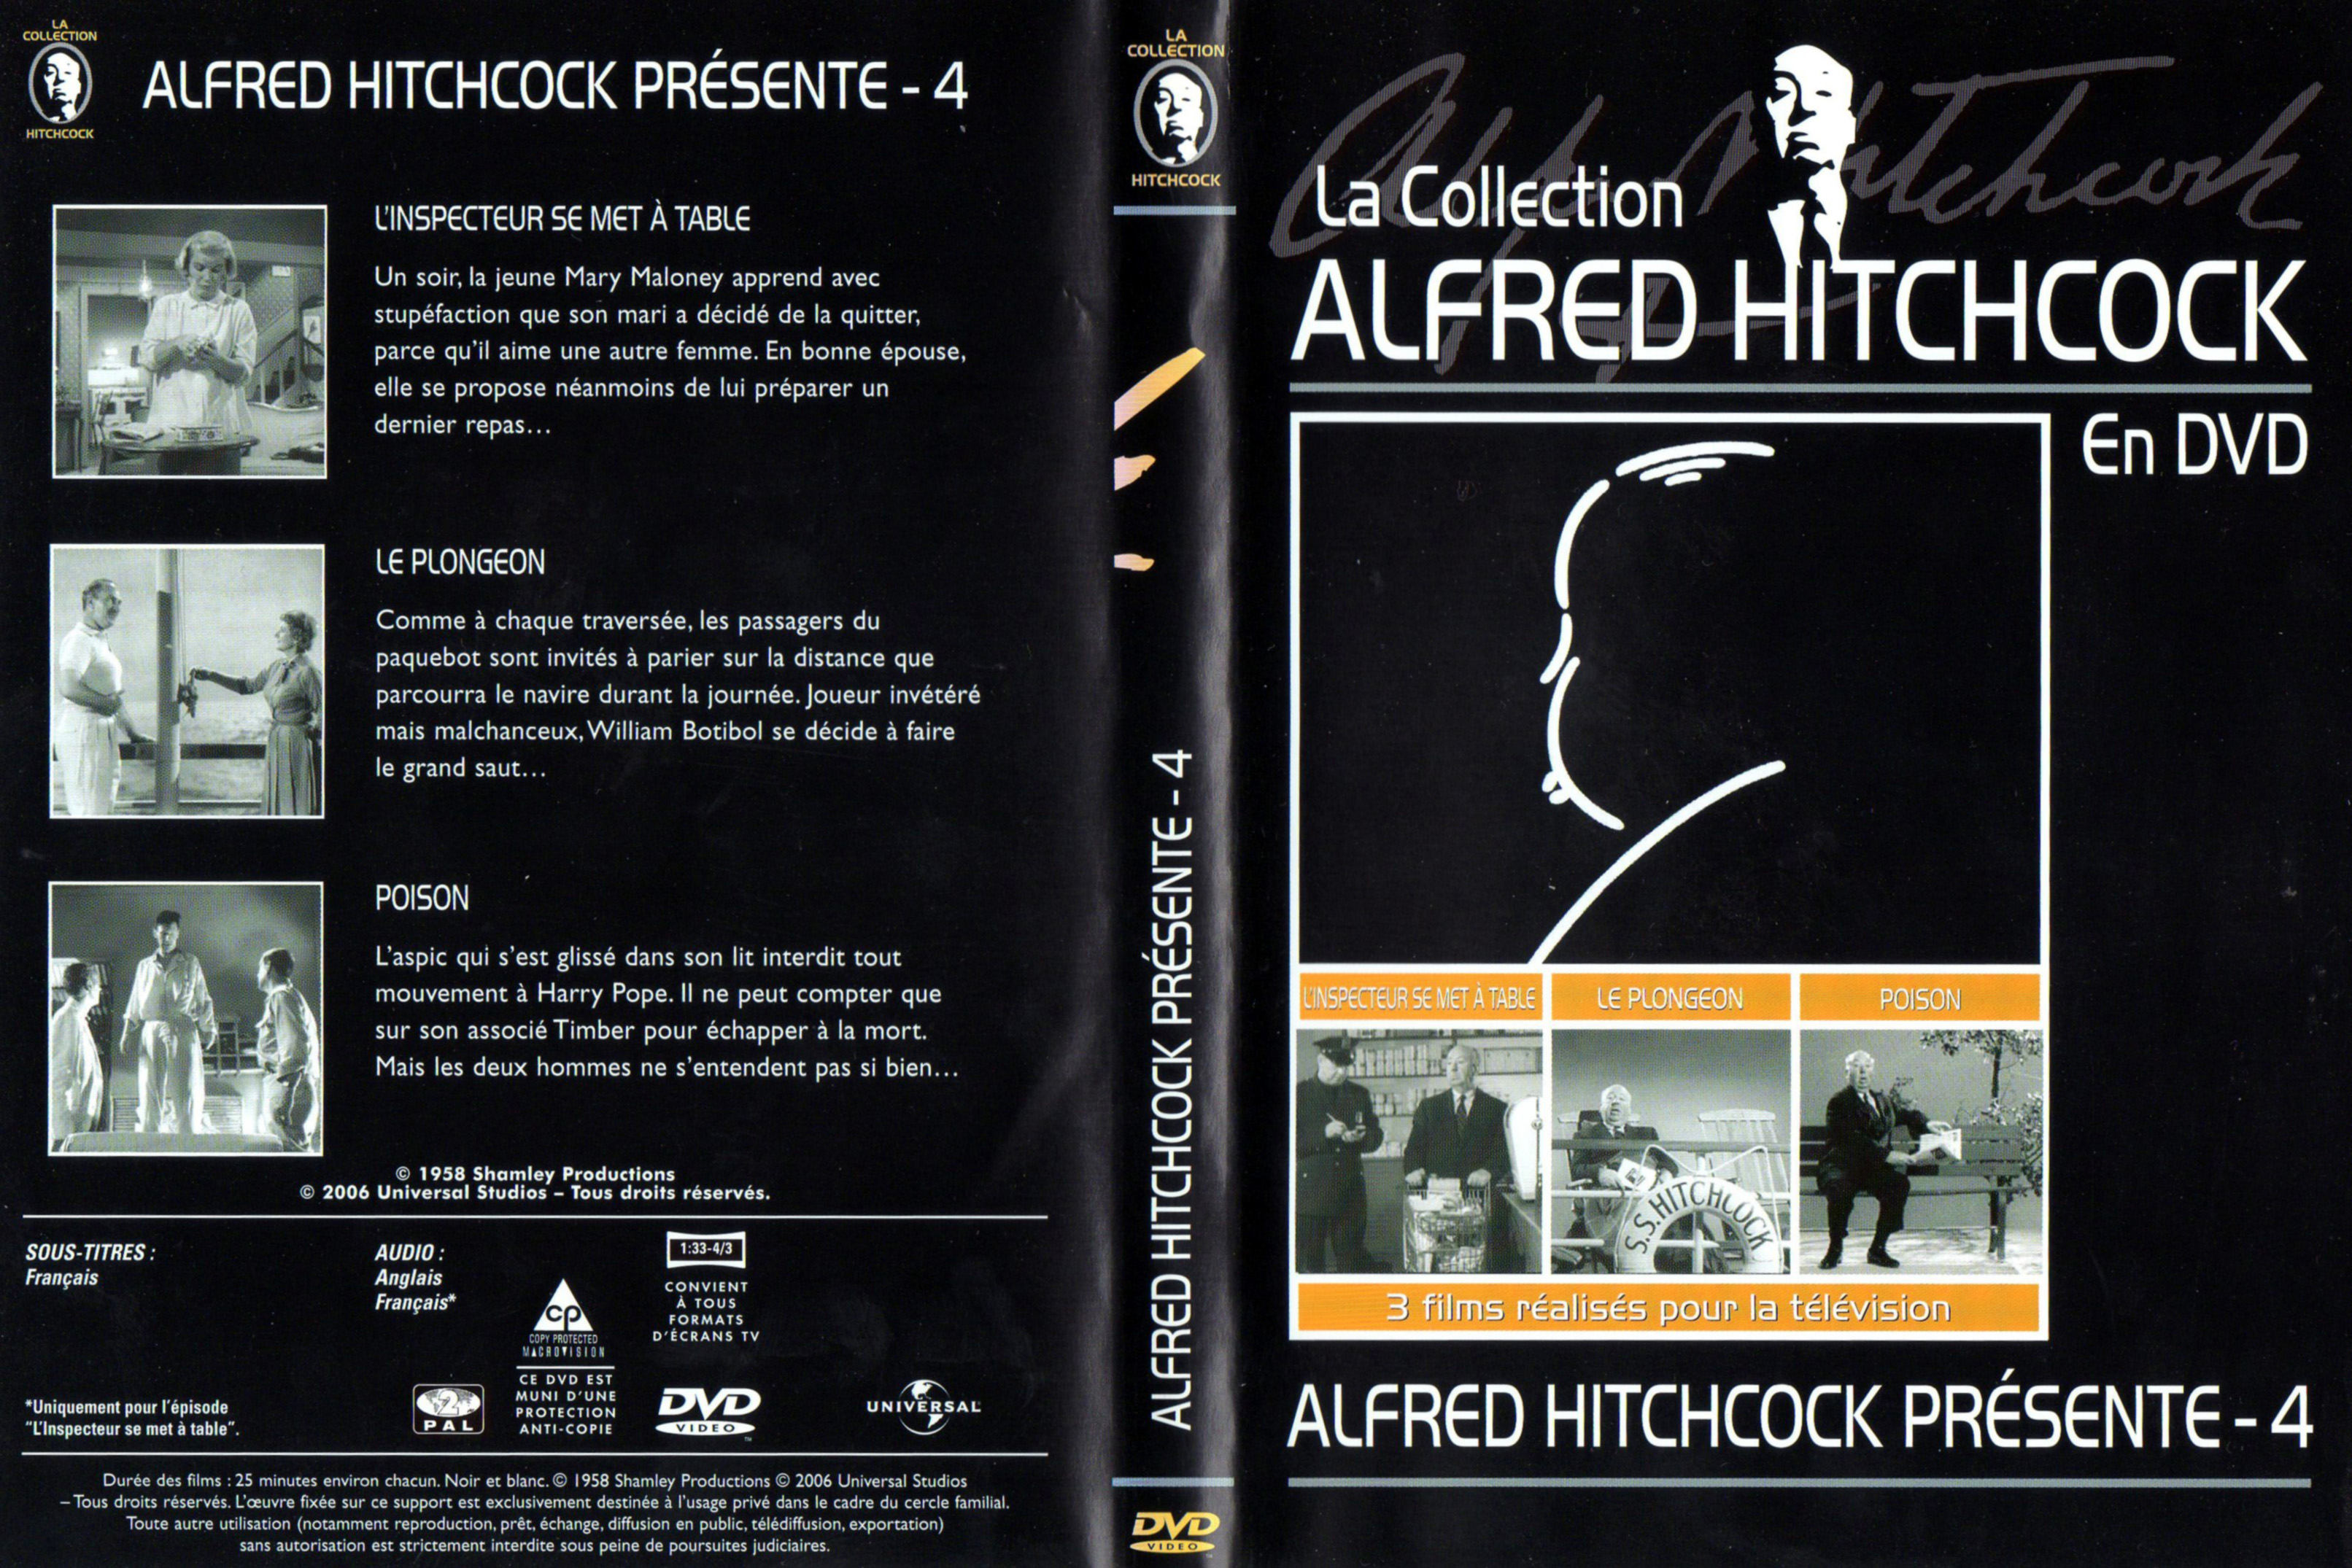 Jaquette DVD Alfred Hitchcock prsente DVD 4